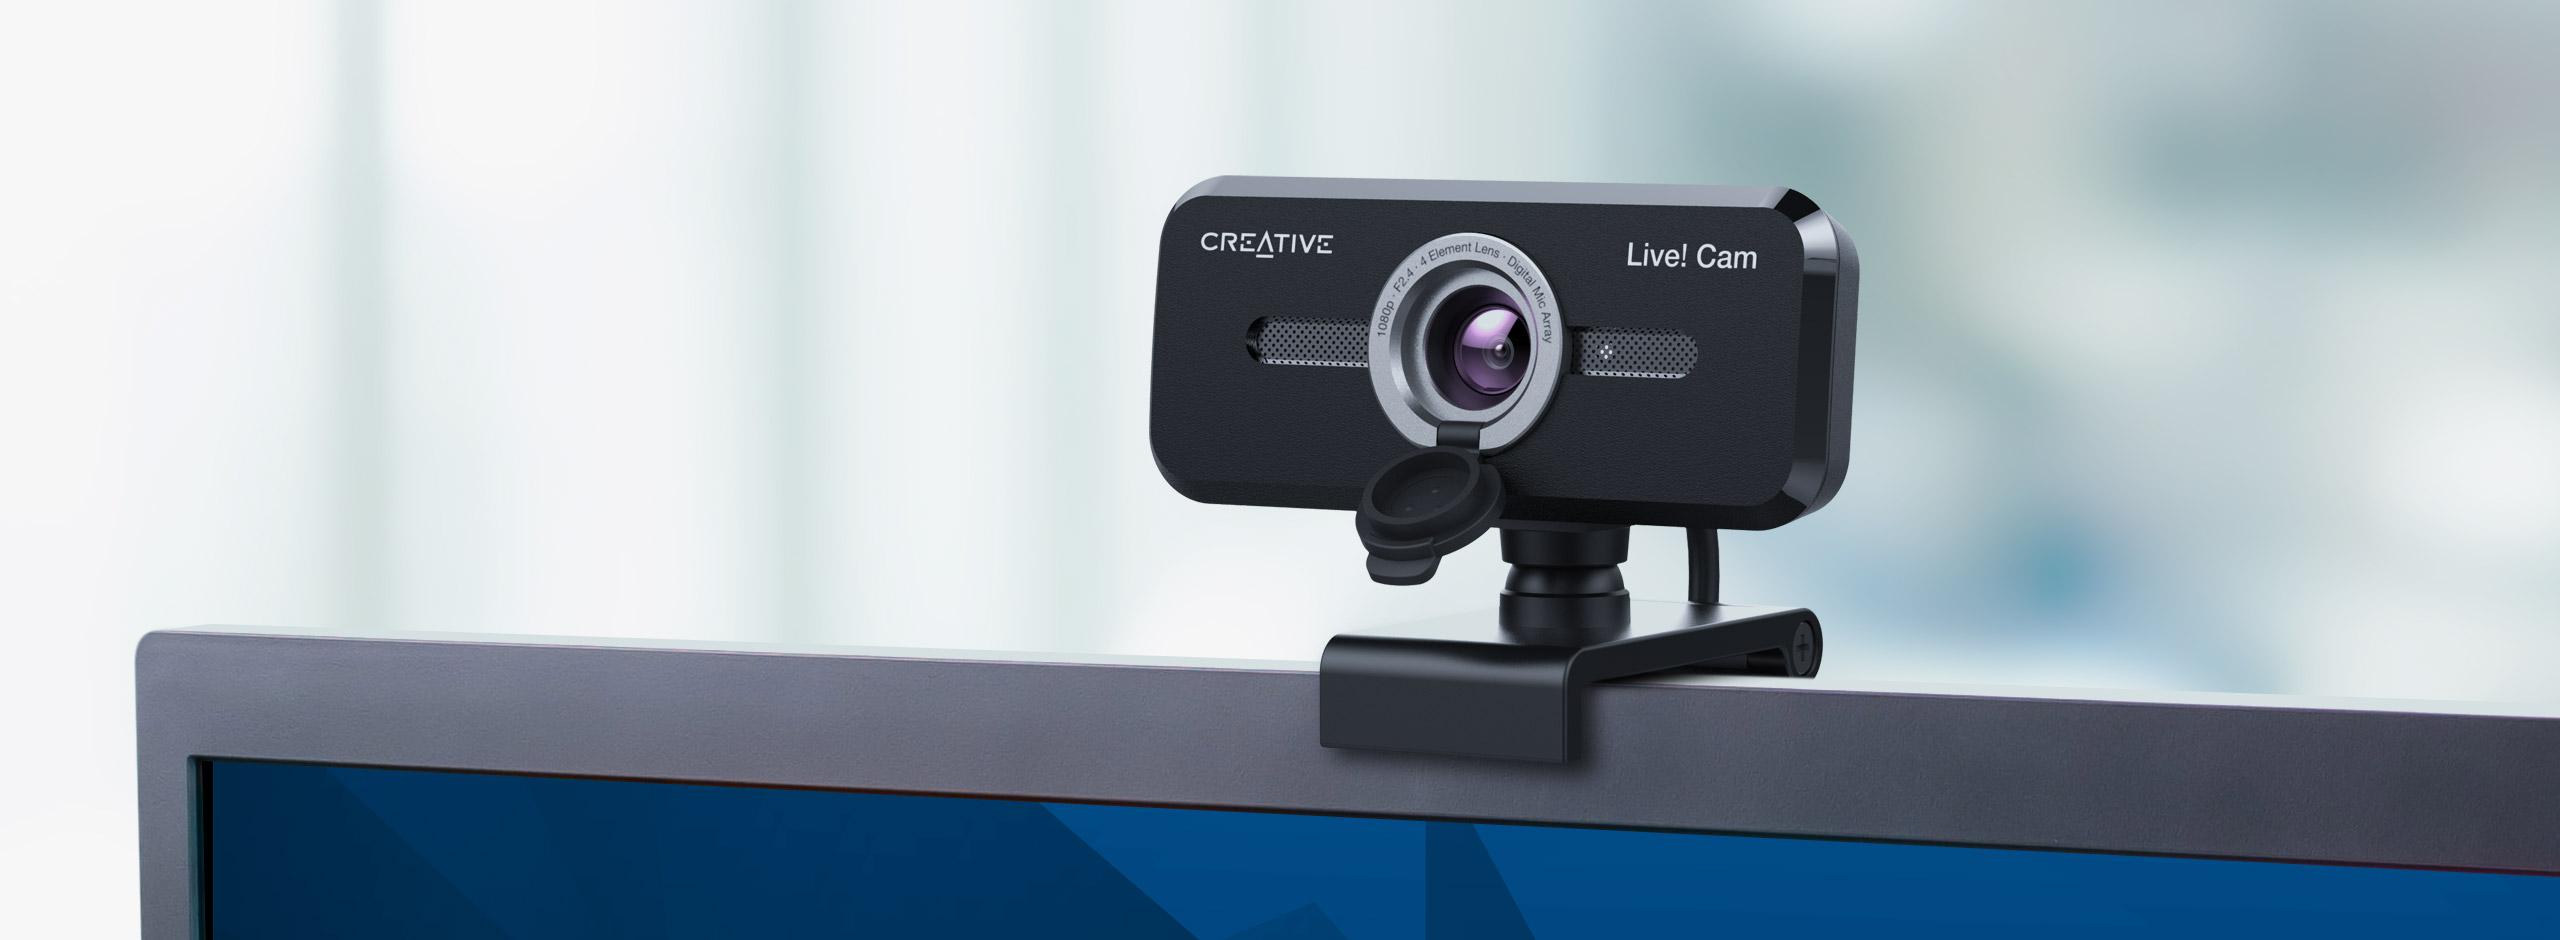 Kamera internetowa Creative Live Cam Sync 1080 V2 FullHD